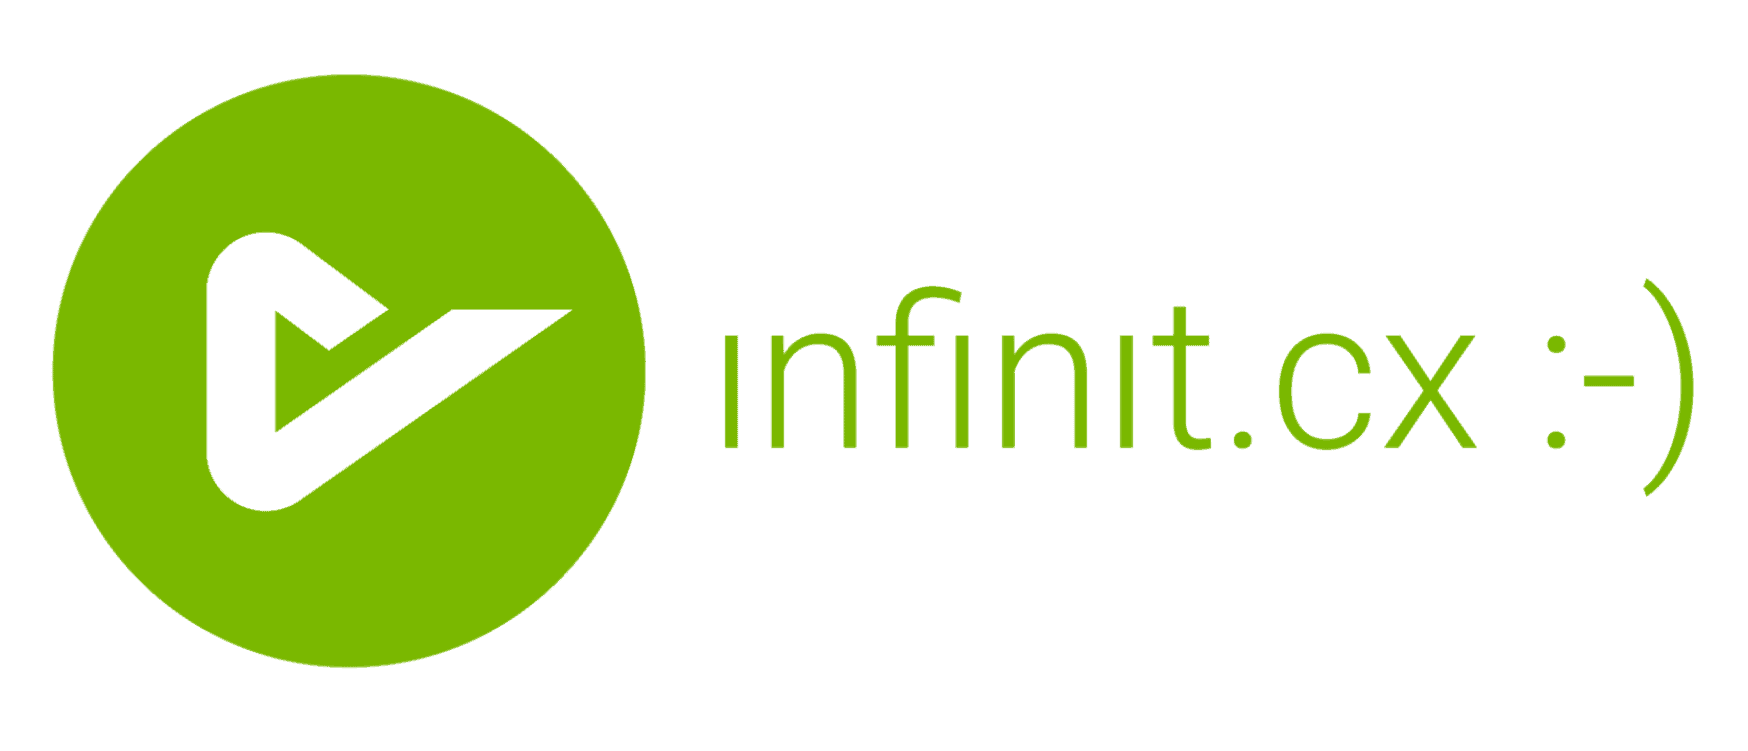 infinit.cx - The Customer Experience Powerhouse